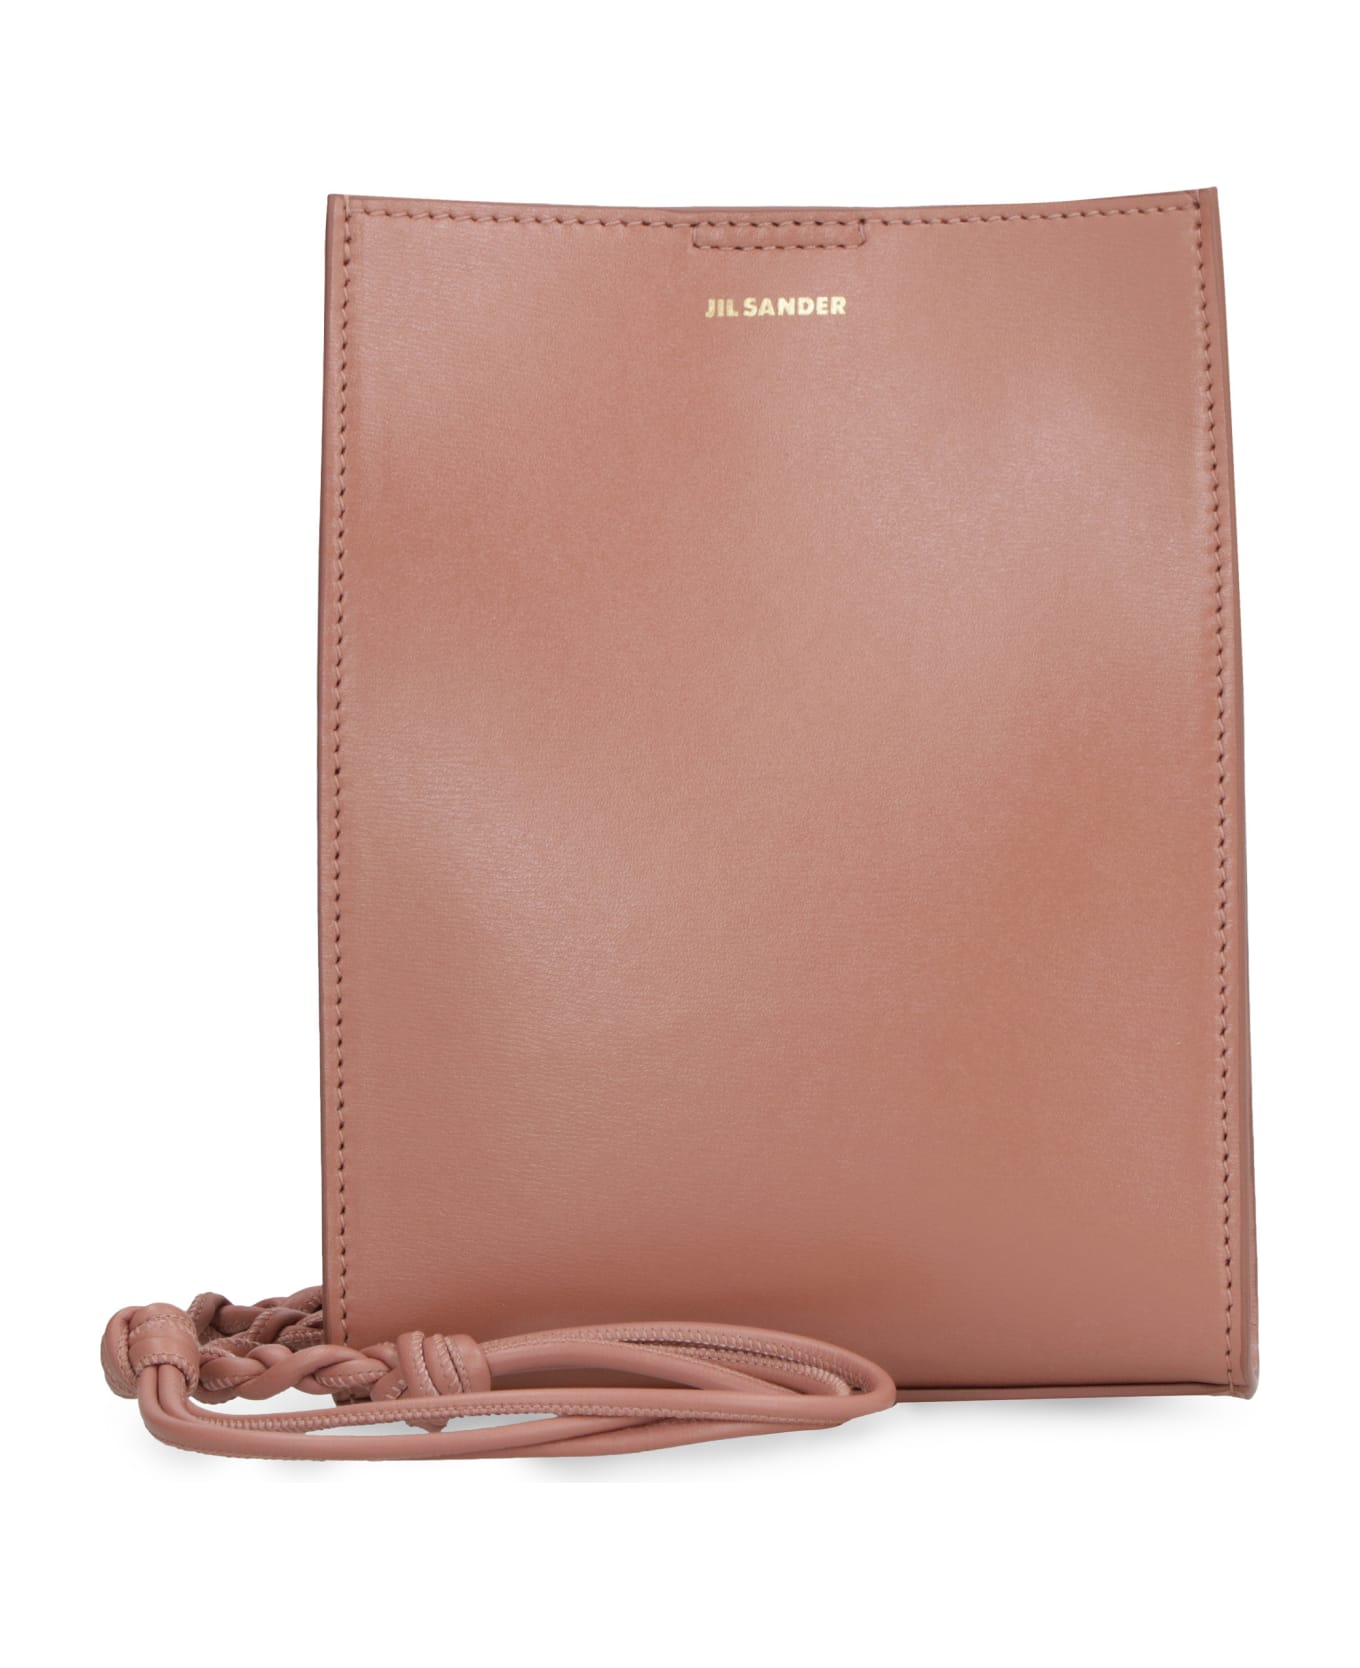 Jil Sander Tangle Leather Crossbody Bag - Pink